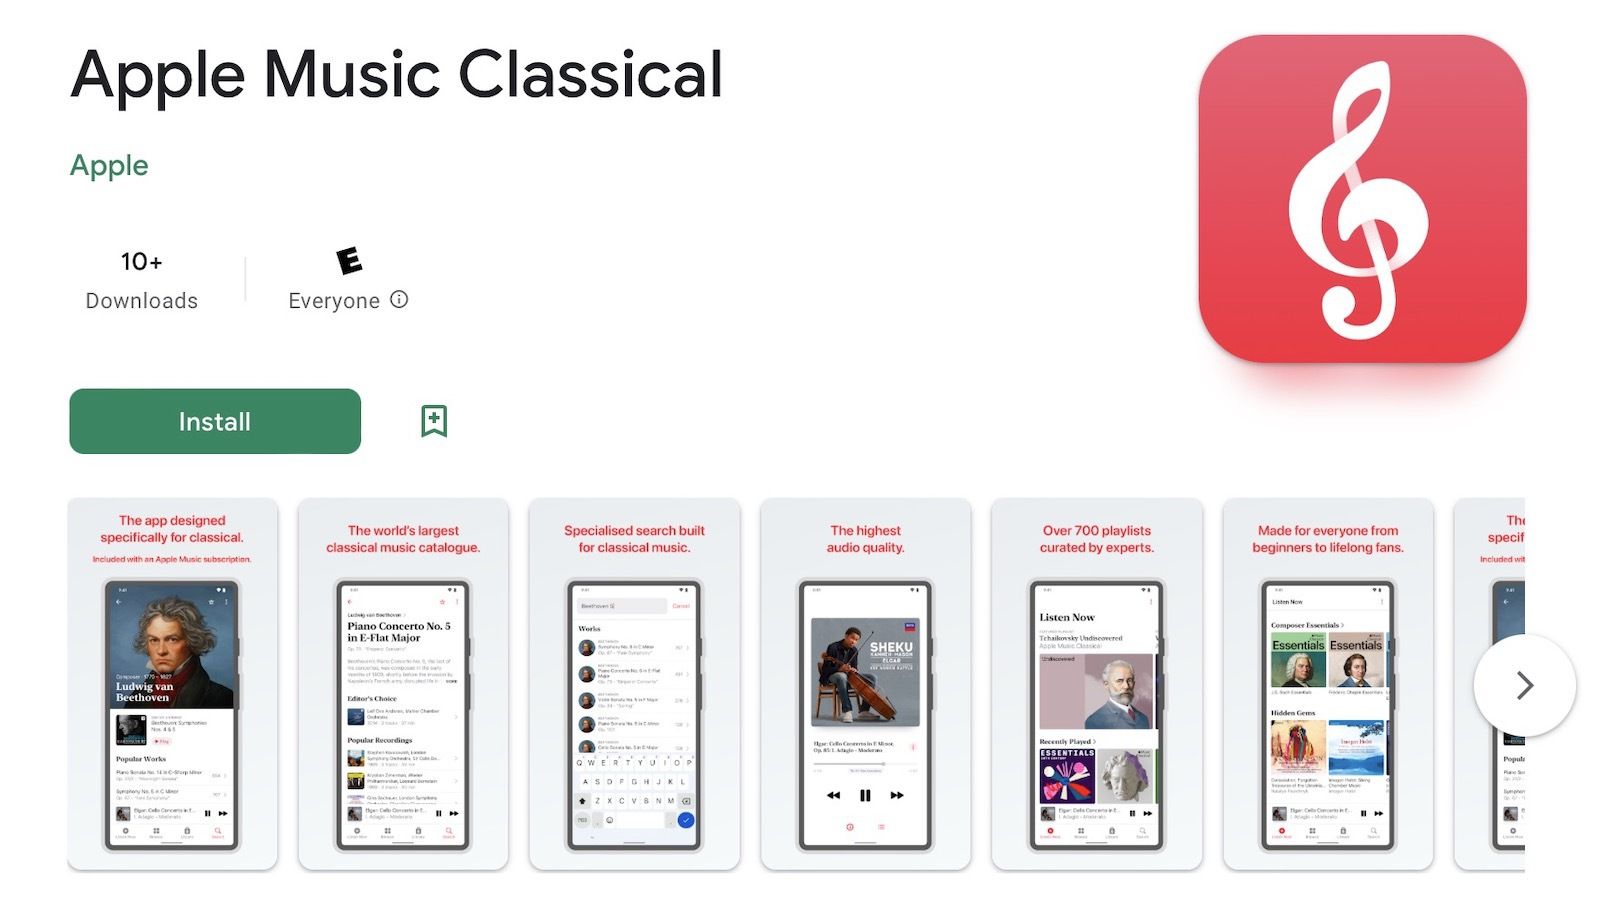 Android版蘋果古典音樂推出！比iPad和Mac版更早 | Android, Apple Music Classical, 蘋果古典音樂 | iPhone News 愛瘋了